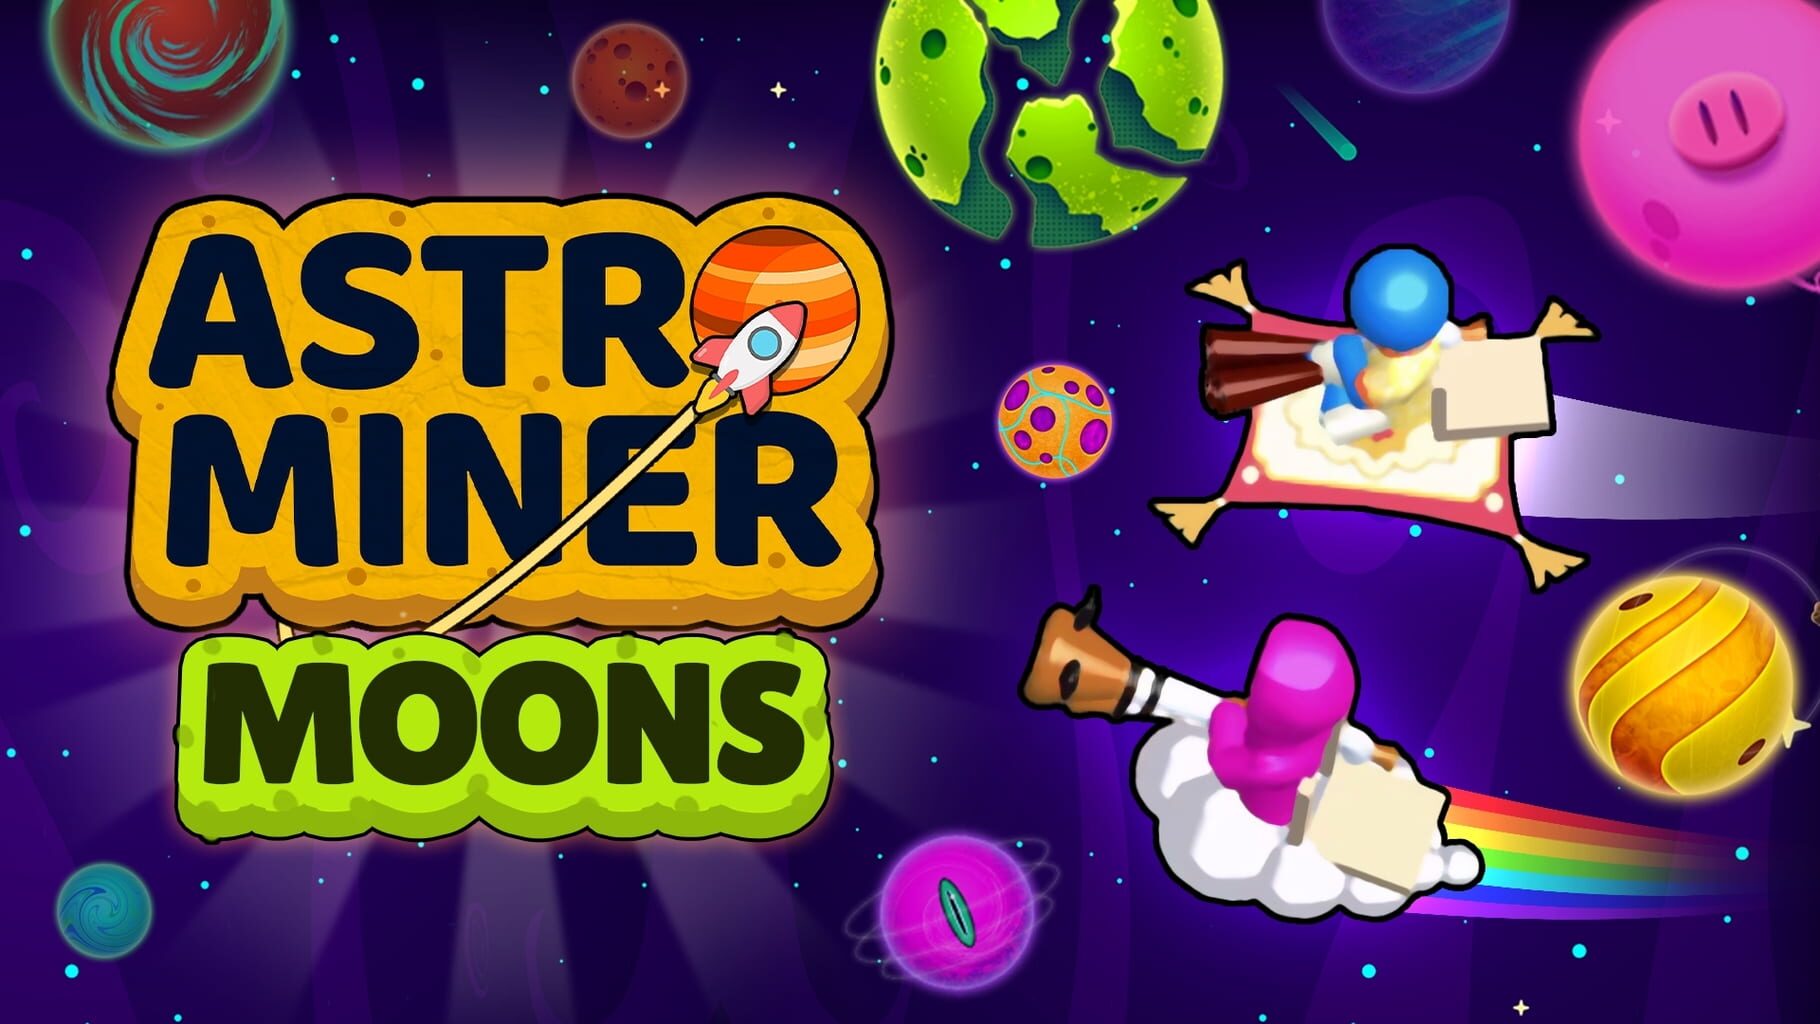 Astro Miner: Moons artwork